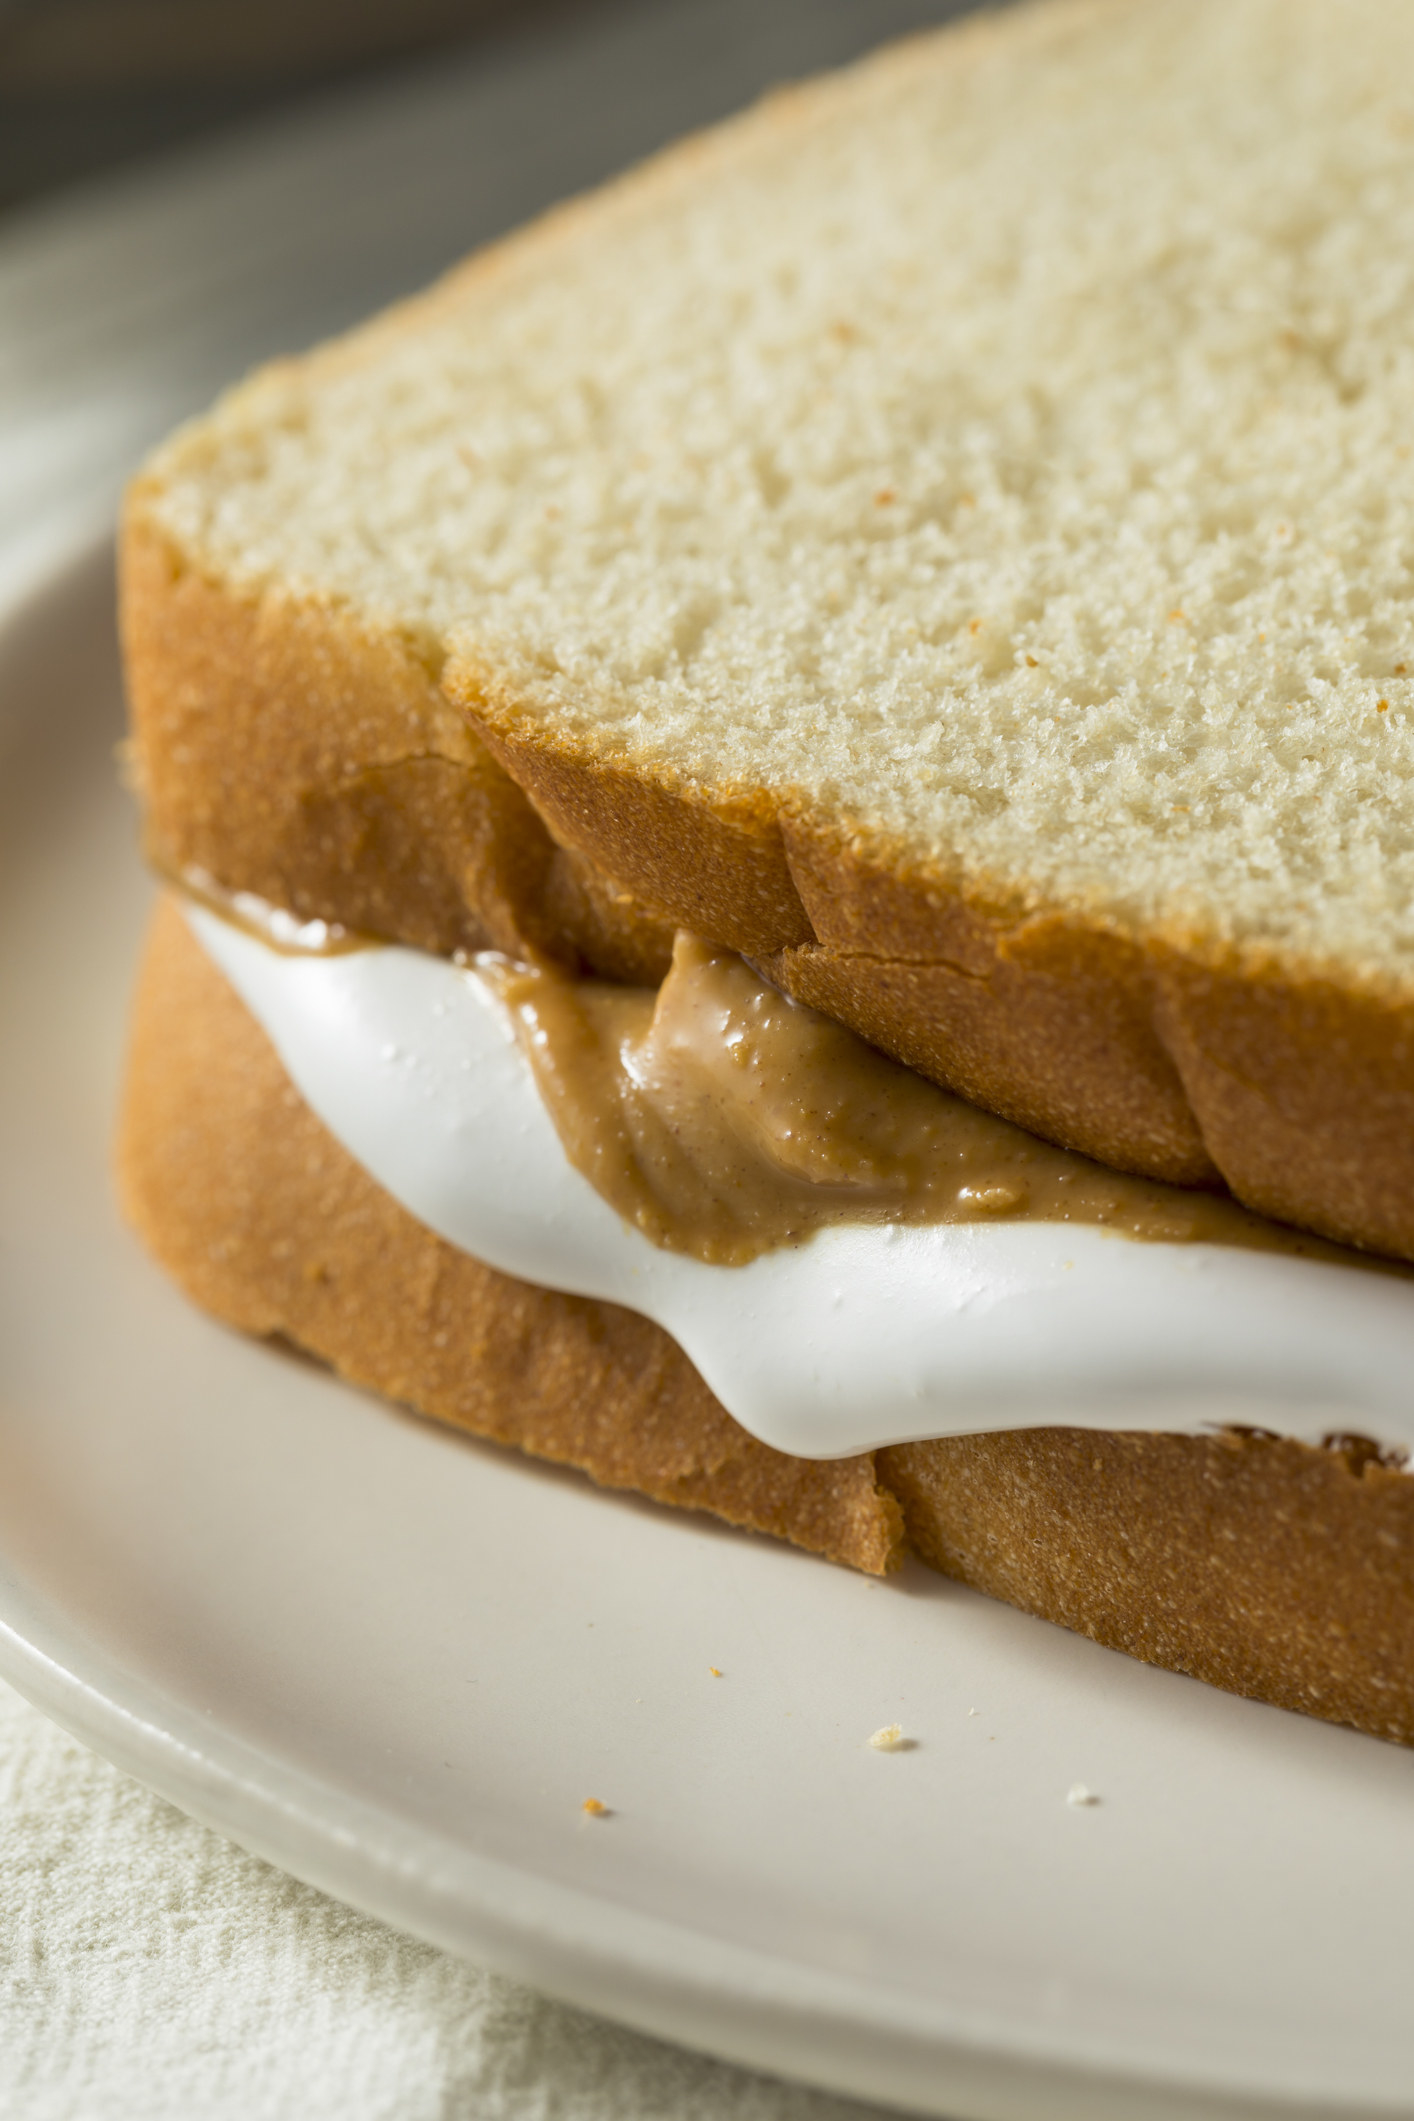 A peanut butter and marshmallow cream sandwich